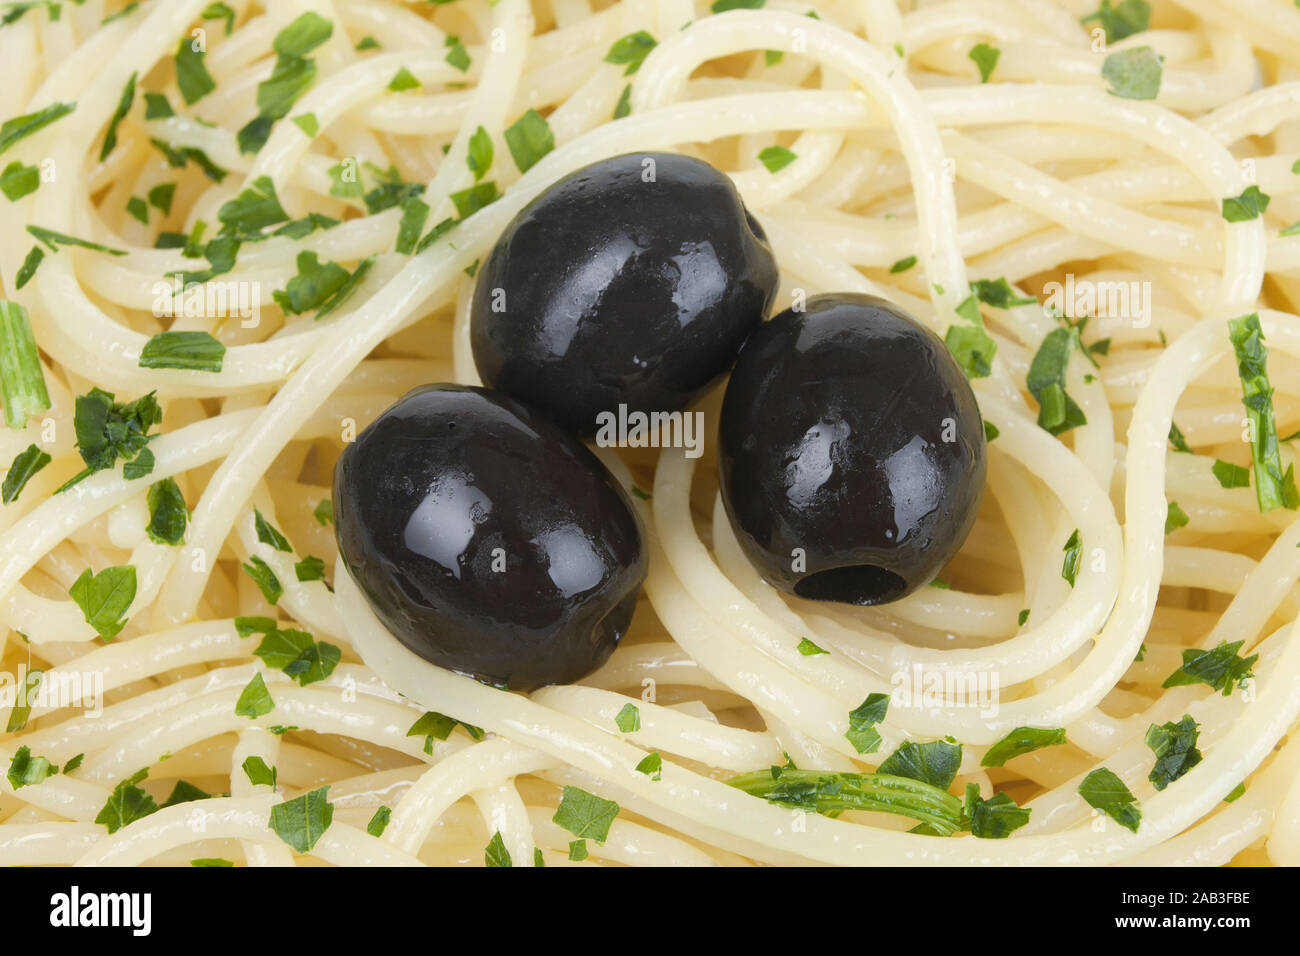 Spaghetti mit Oliven und Kraeuter |Spaghetti with olives and herbs| Stock Photo